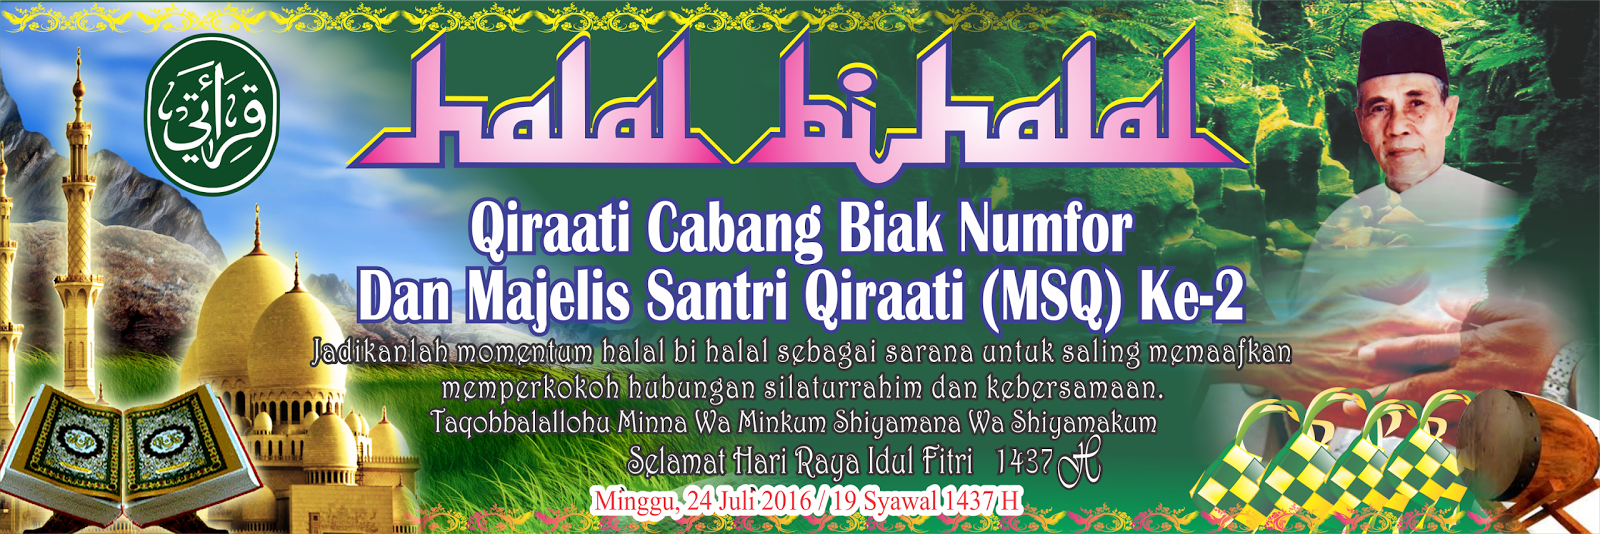 Kumpulan Contoh Banner Halal Bihalal Alumni Ala Model Kini